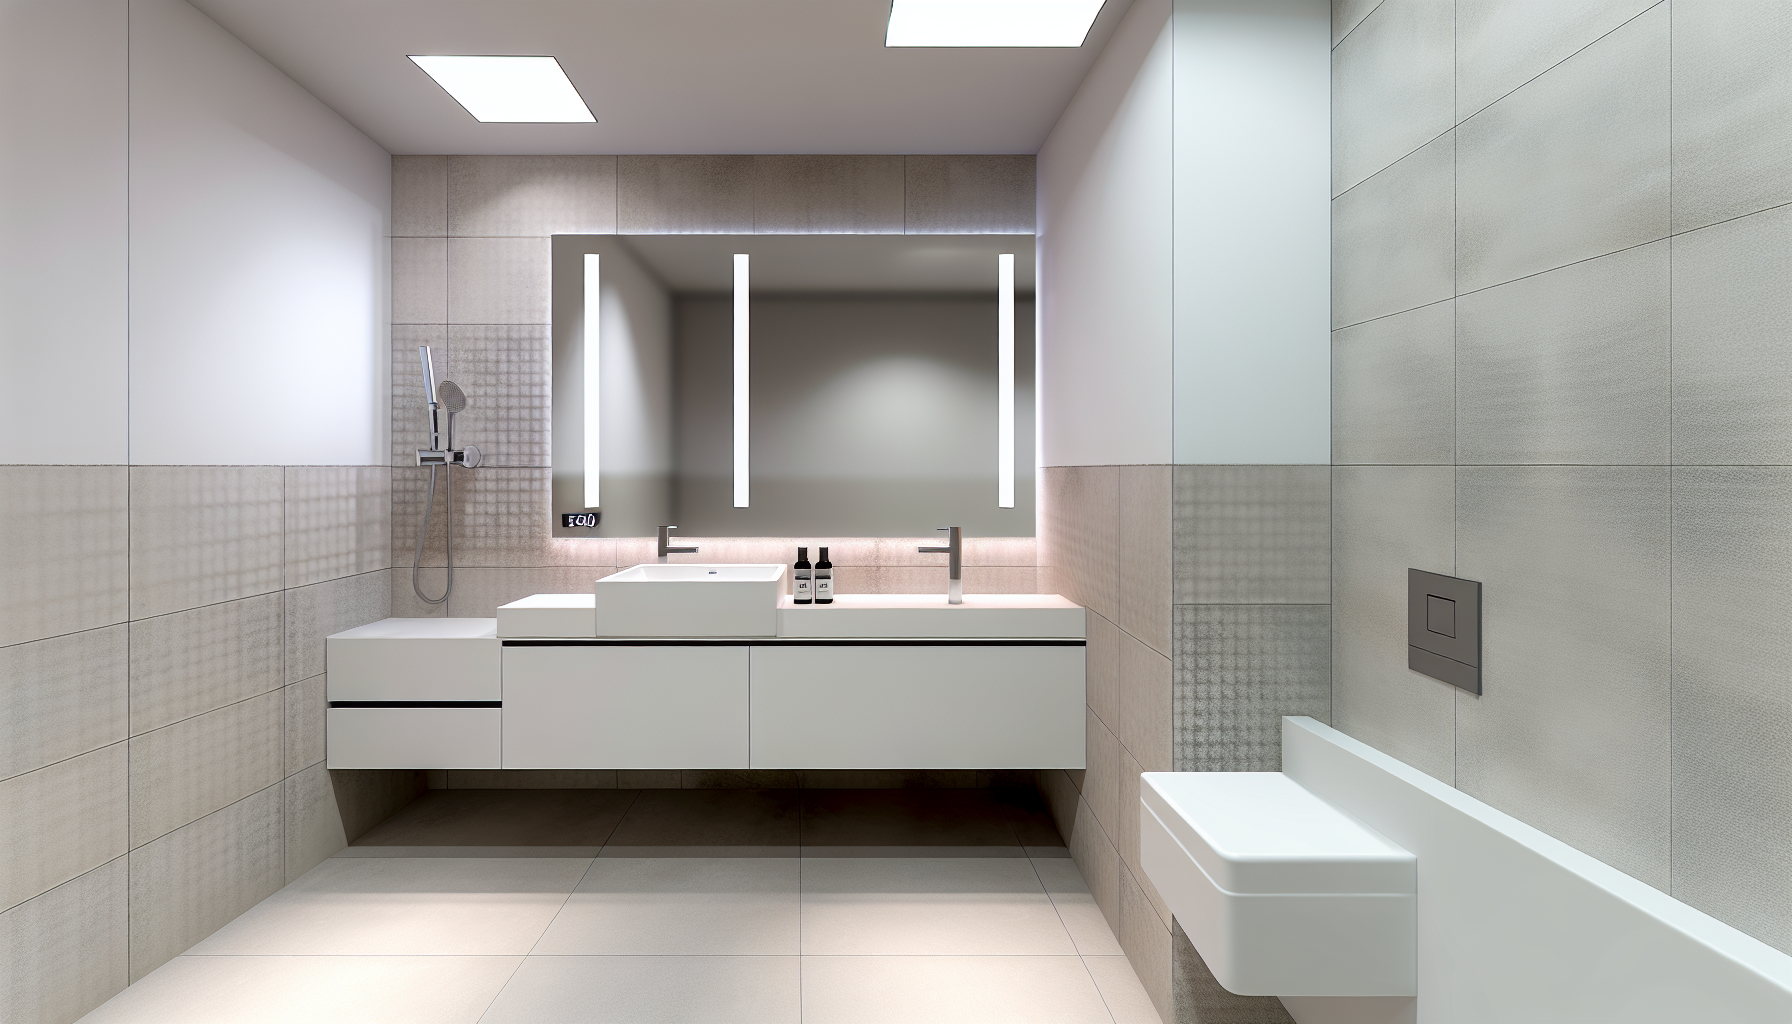 Sleek and contemporary Edge II Range in a bathroom